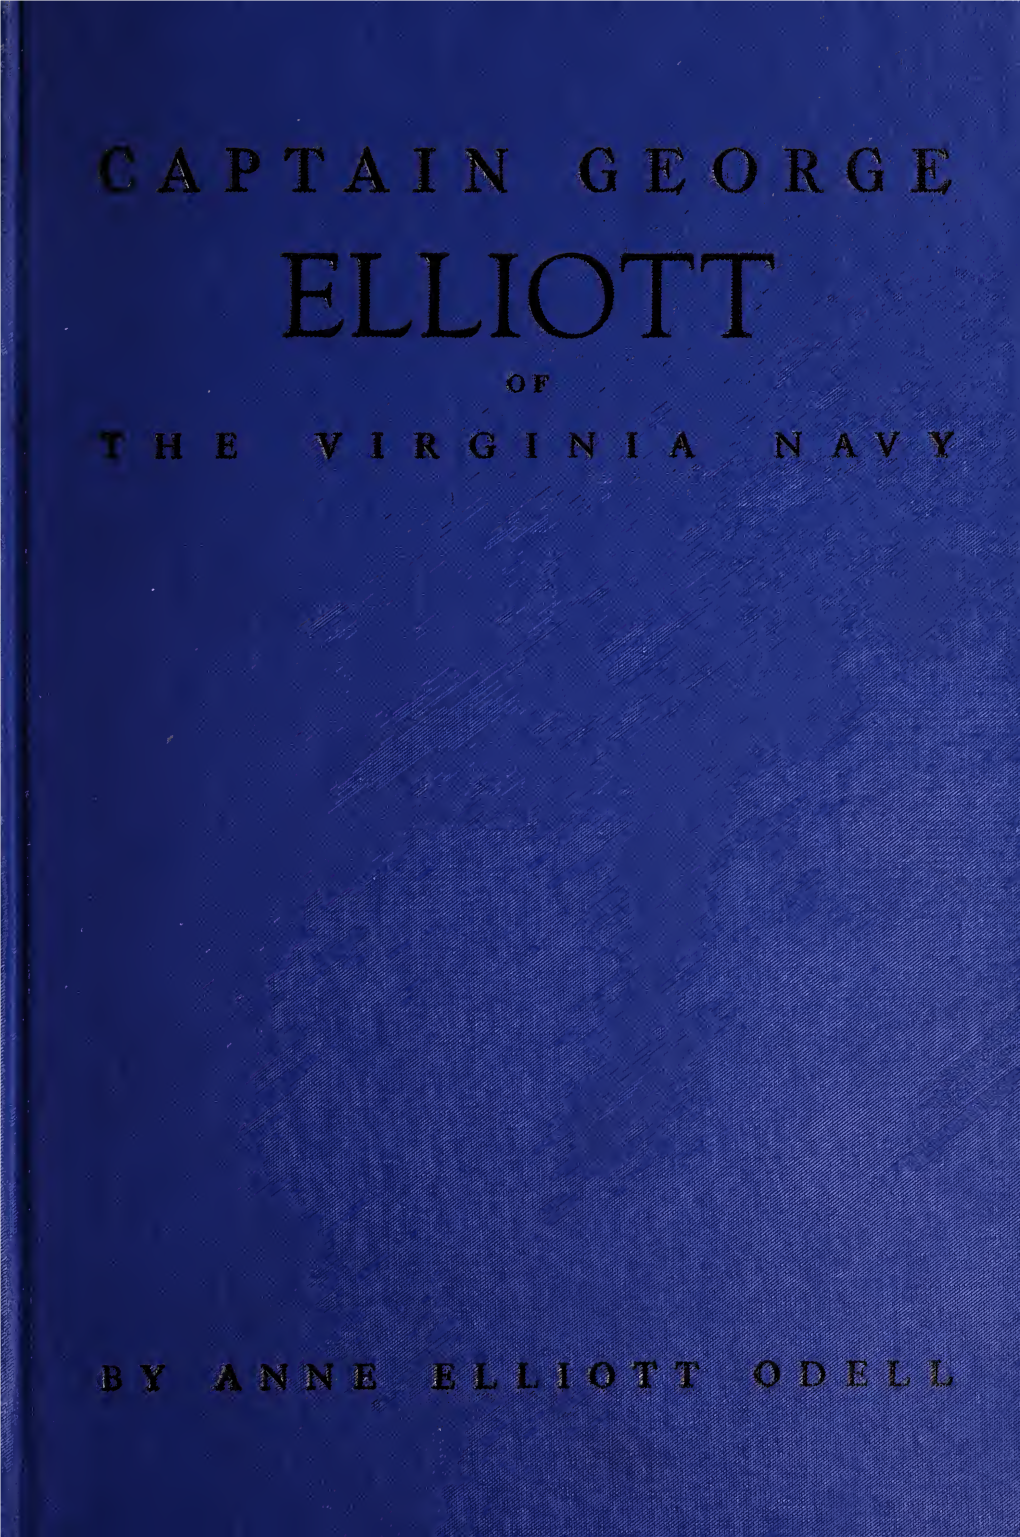 Captain George Elliott of the Virginia Navy